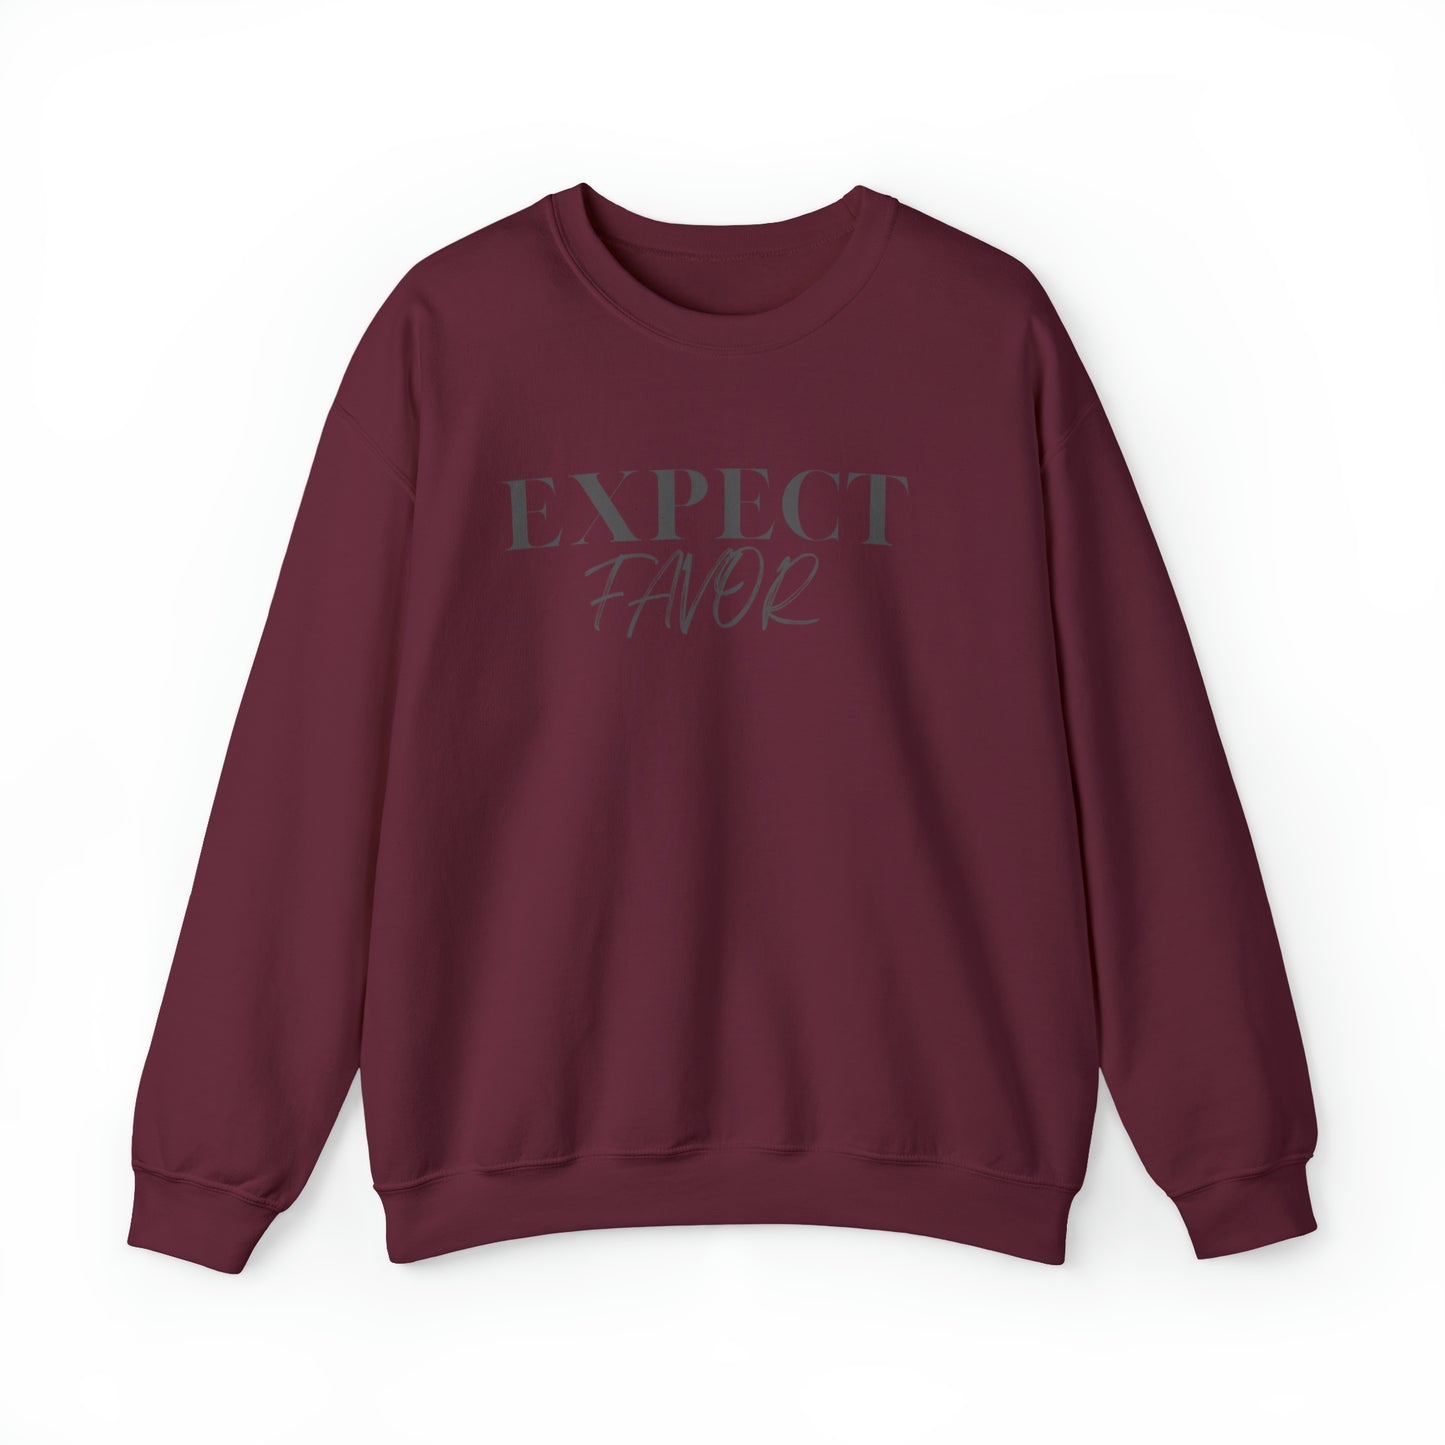 Expect Favor Christian Sweatshirt, Positive Mindset Shirt